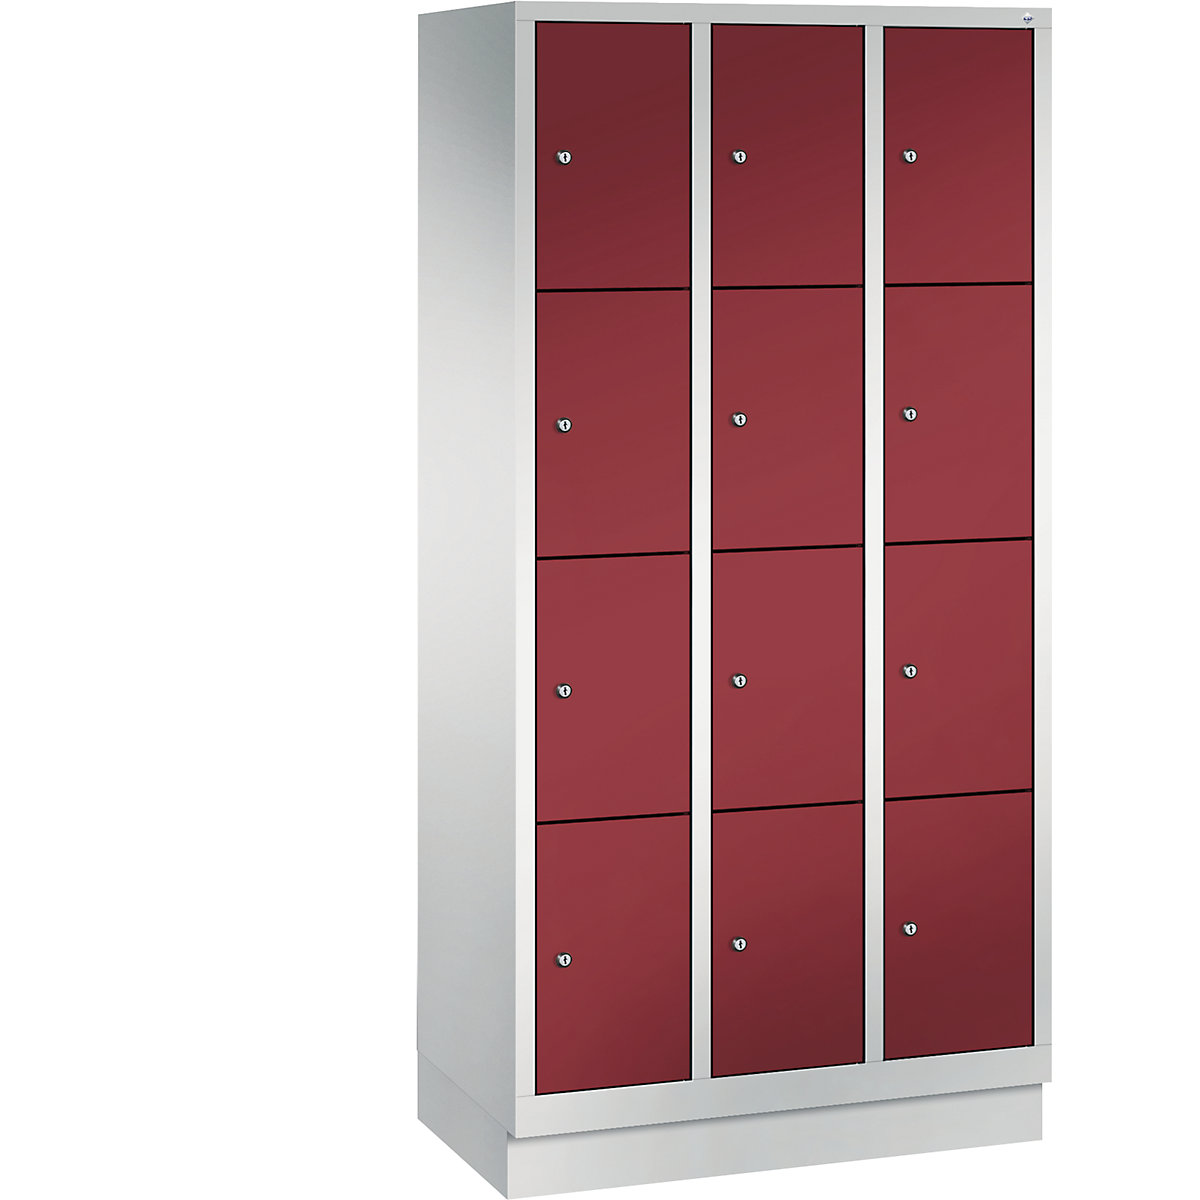 CLASSIC locker unit with plinth – C+P, 3 compartments, 4 shelf compartments each, compartment width 300 mm, light grey / ruby red-6